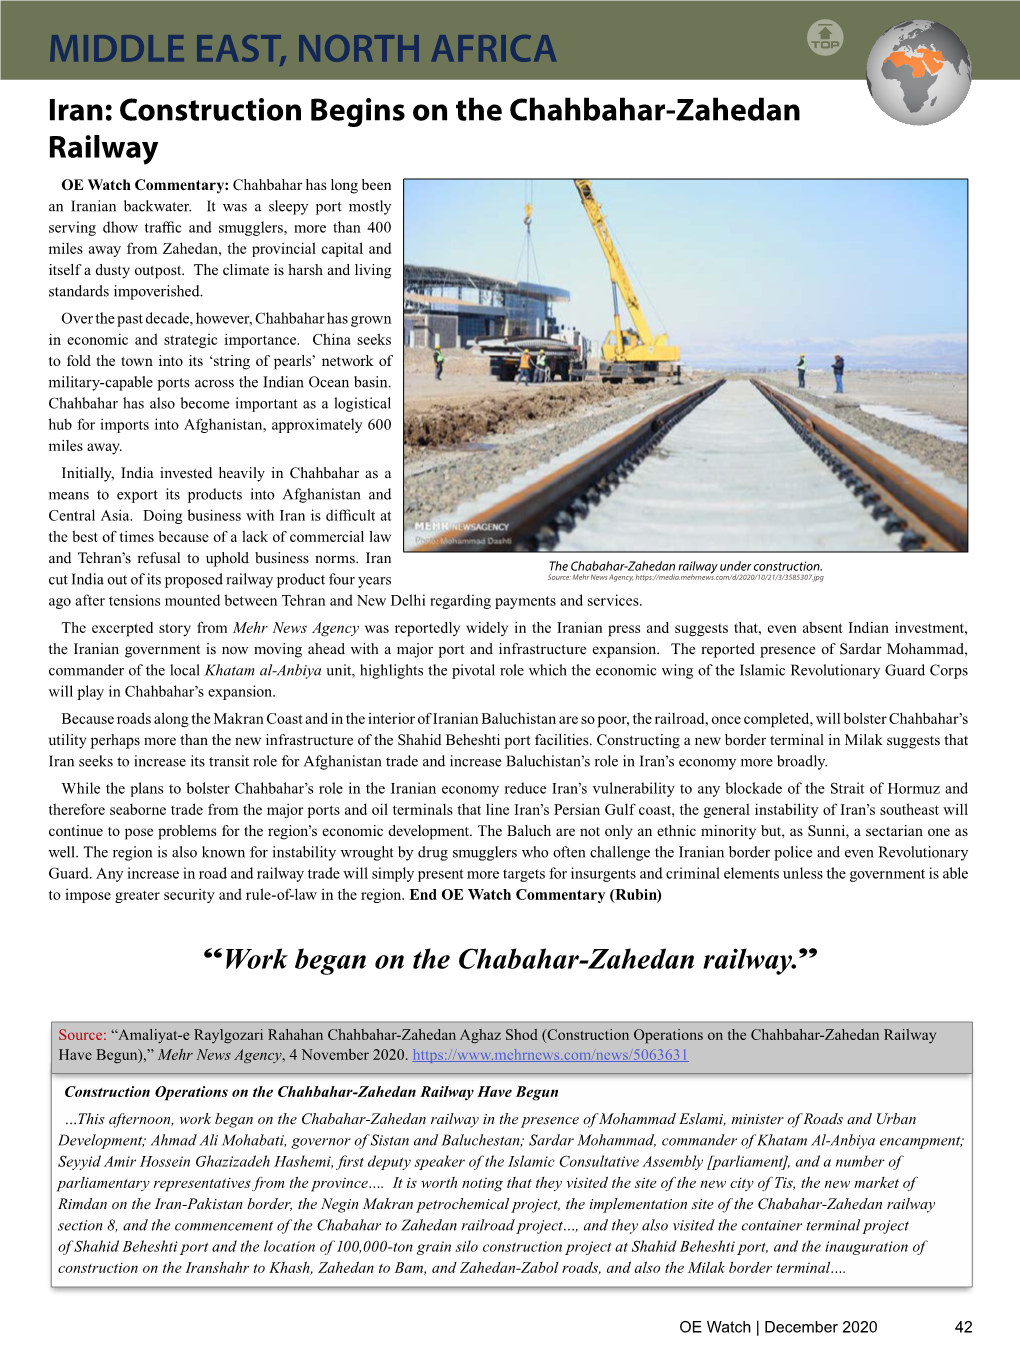 Construction Begins on the Chahbahar-Zahedan Railway OE Watch Commentary: Chahbahar Has Long Been an Iranian Backwater